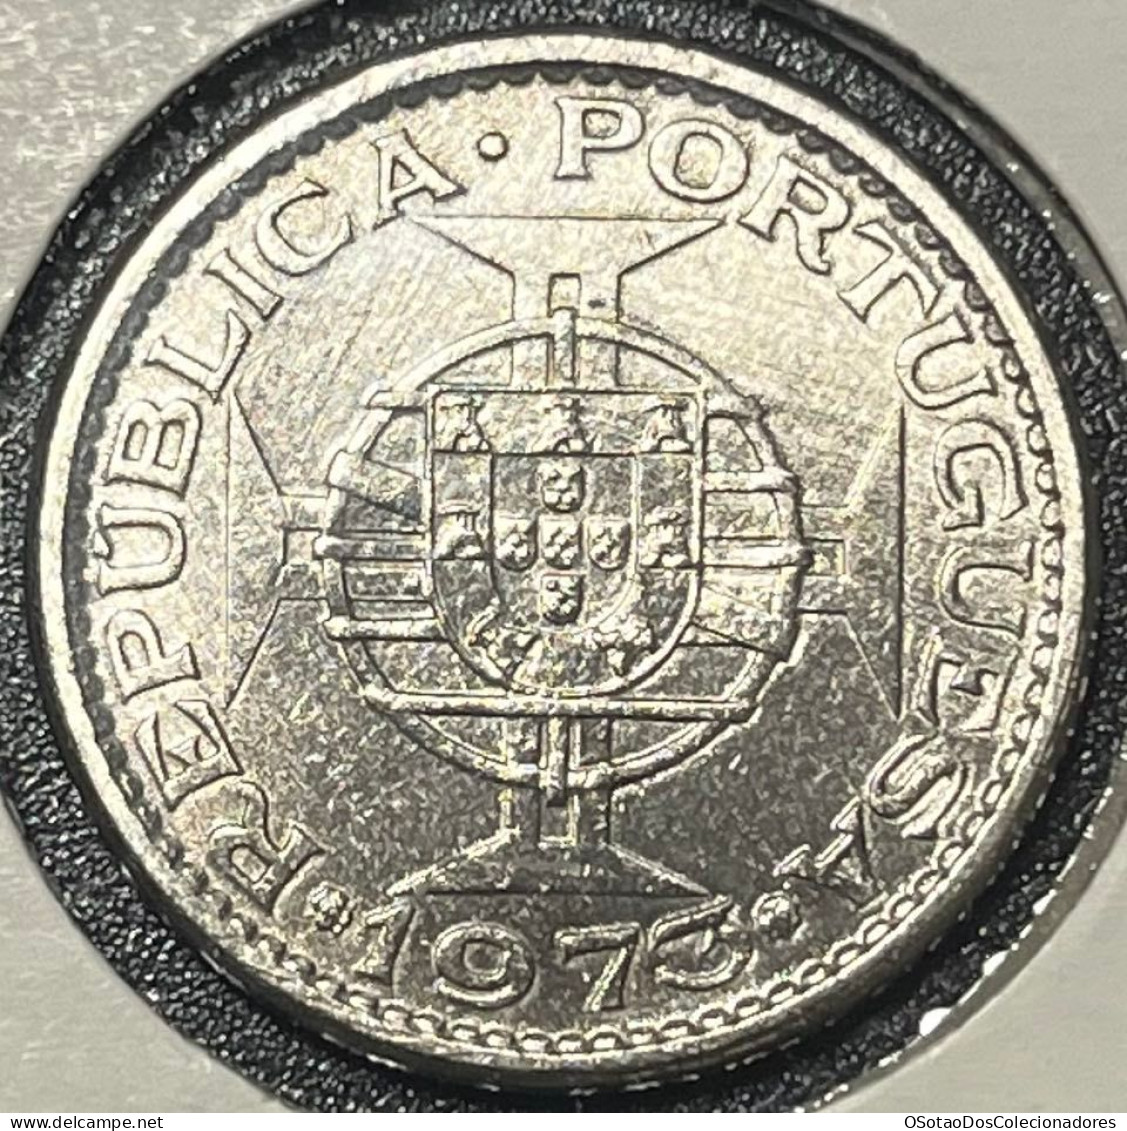 Moeda Moçambique Portugal - Coin Moçambique - 5 Escudos 1973 - MBC ++ - Mozambique